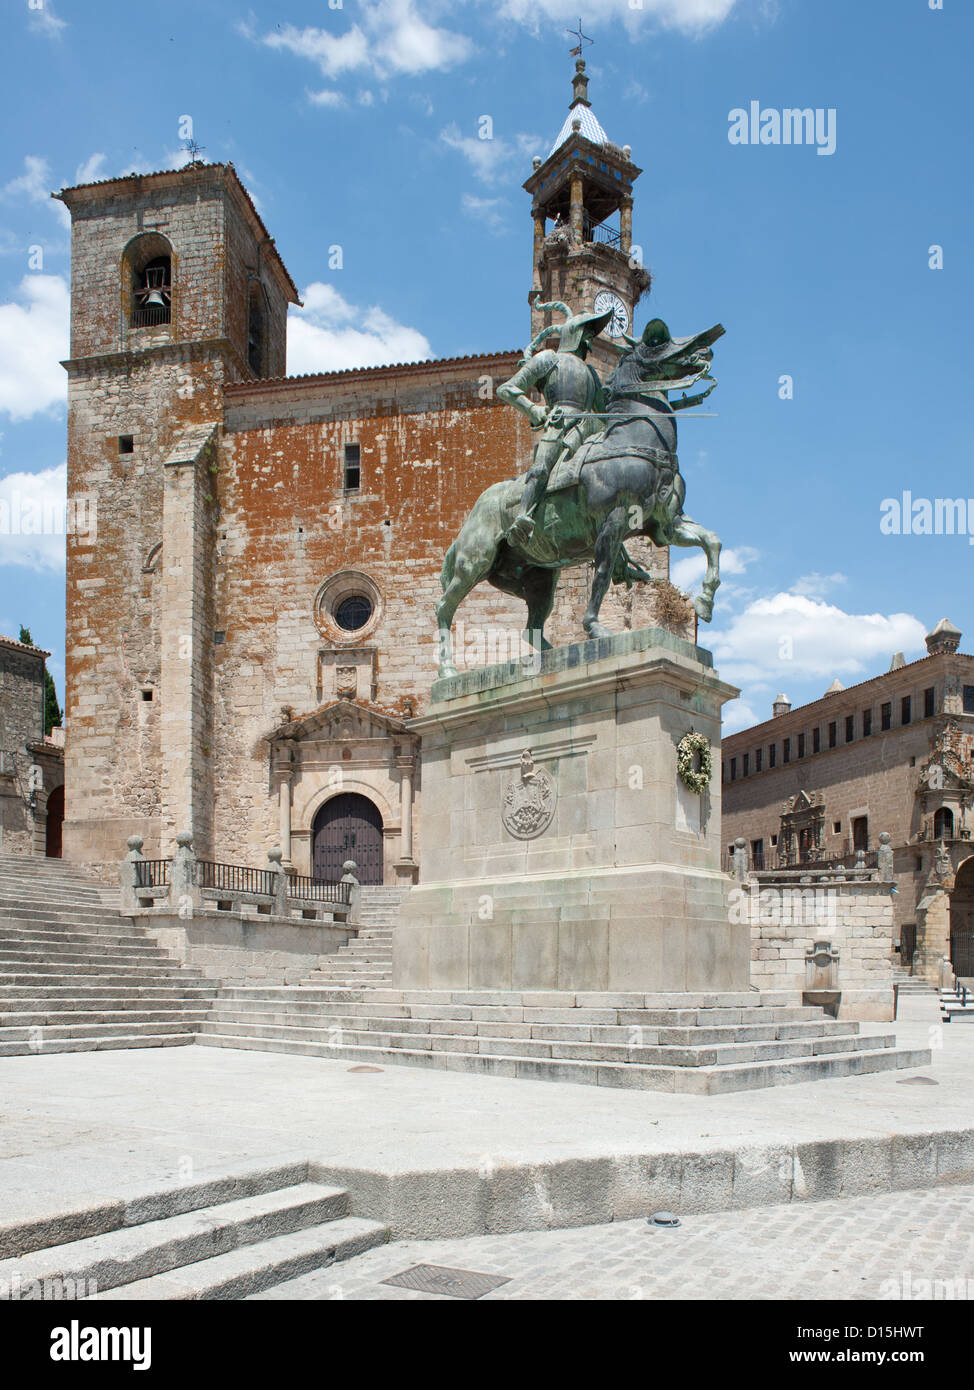 Trujillo - Spain: Plaza Mayor or Main Square. Church of San Martin and statue of Pizarro, Spanish conqueror. Stock Photo